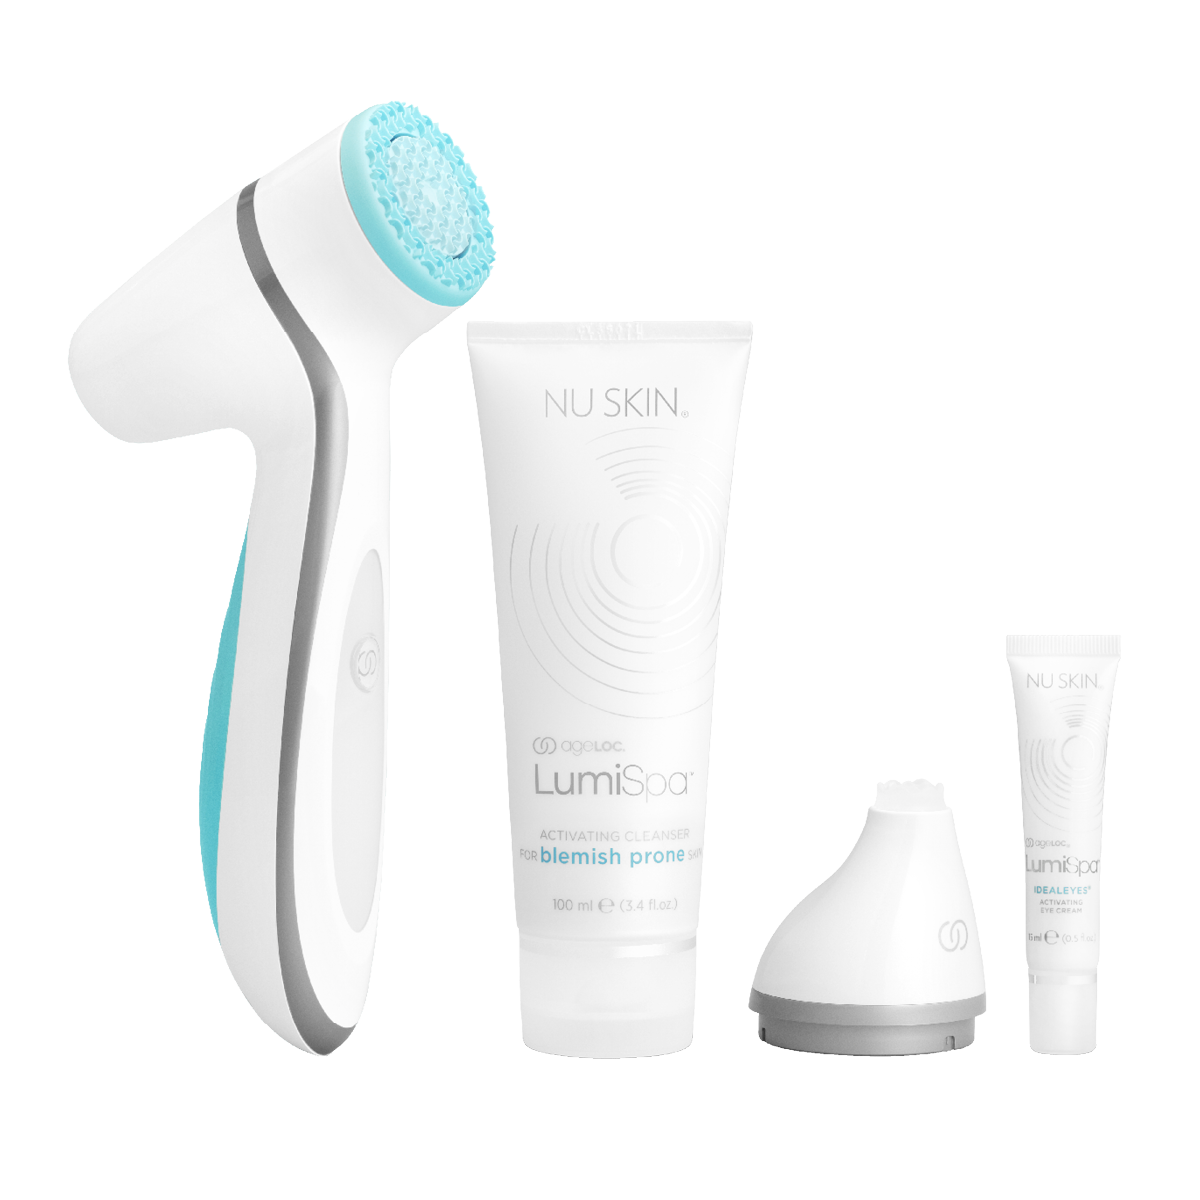 LumiSpa | Facial Cleansing Device | Nu Skin